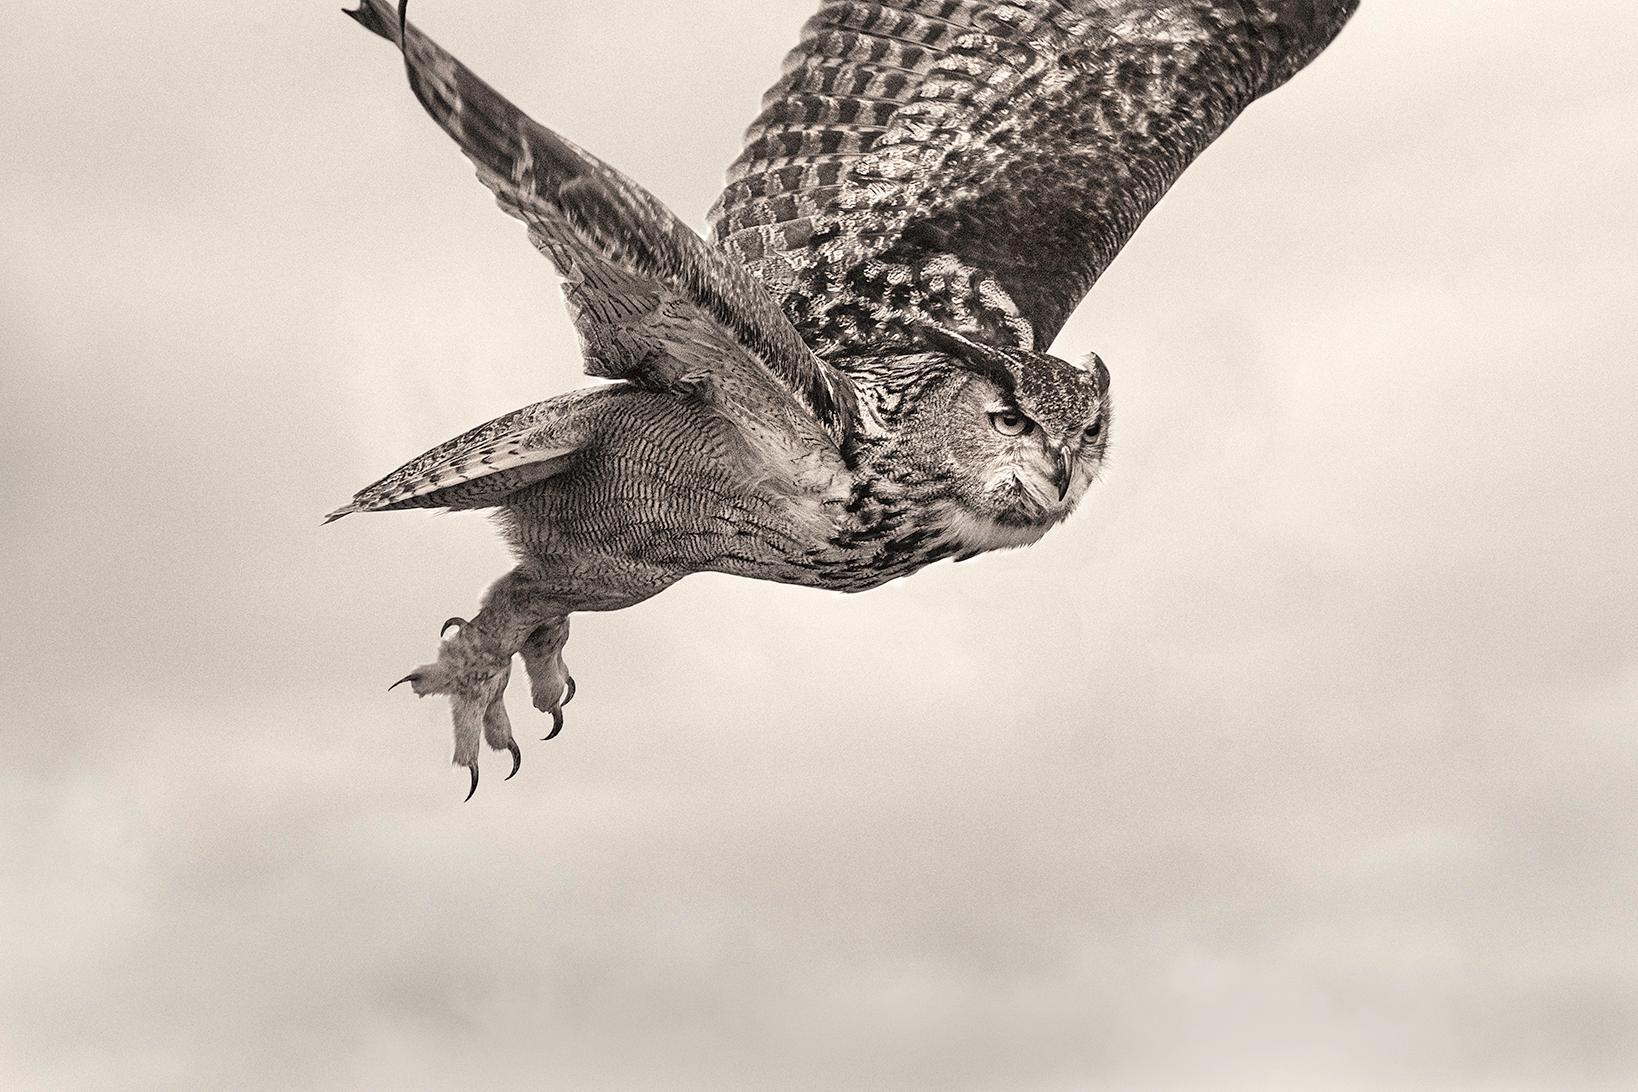 Beth Moon Animal Print - Eagle Owl Flying, limited edition photograph, signed, Platinum/Palladium Print